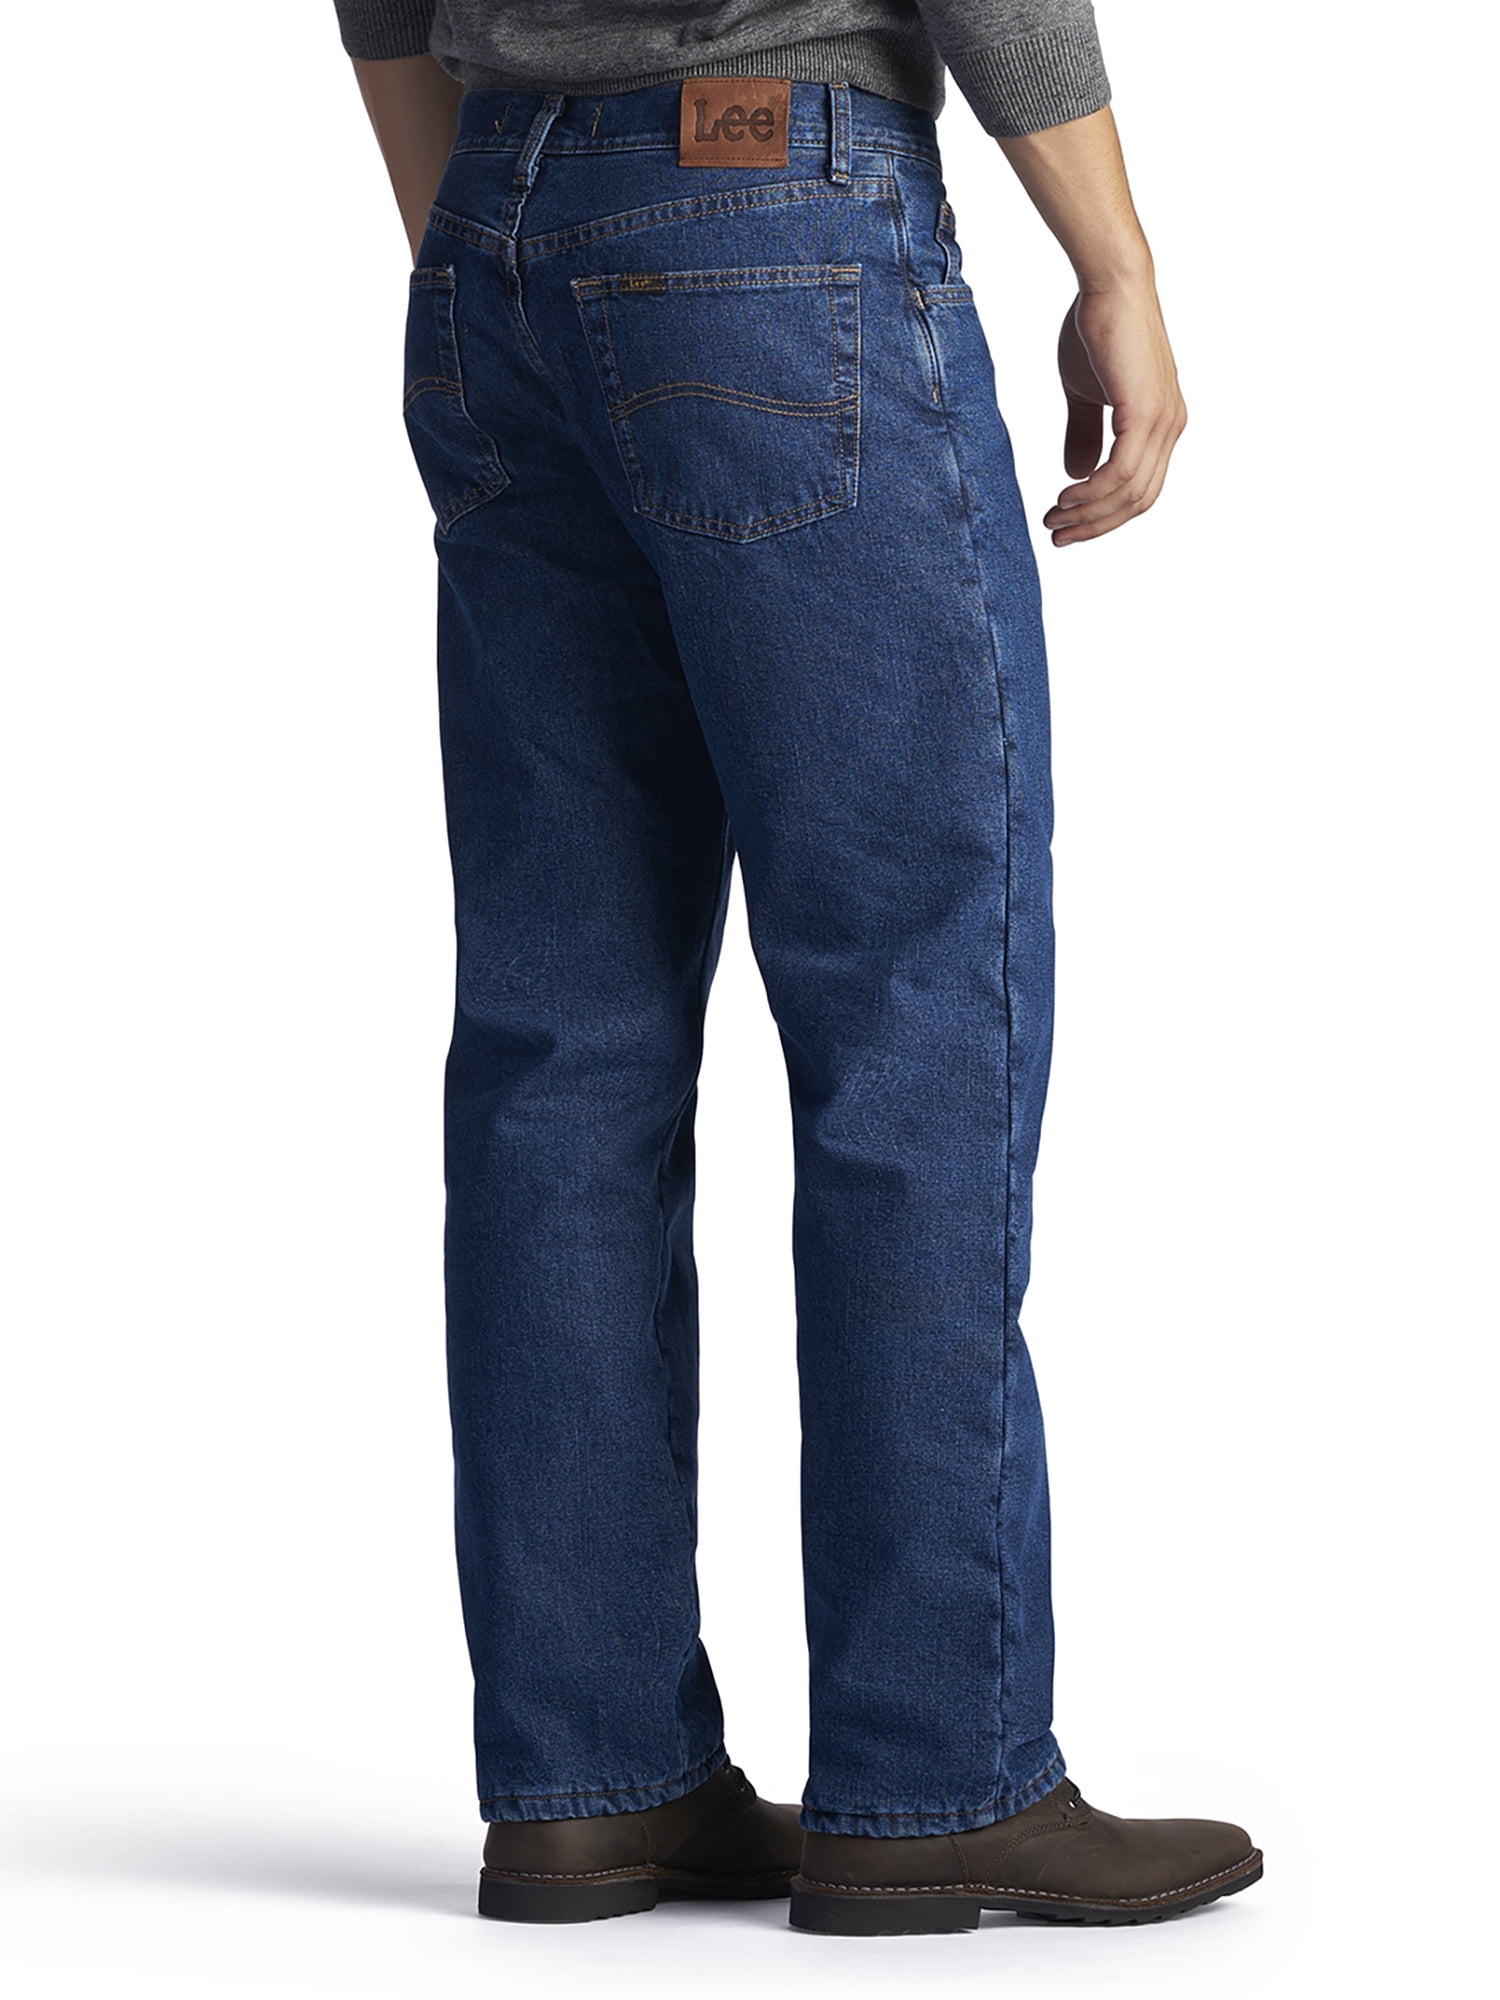 lee men's flannel lined jeans